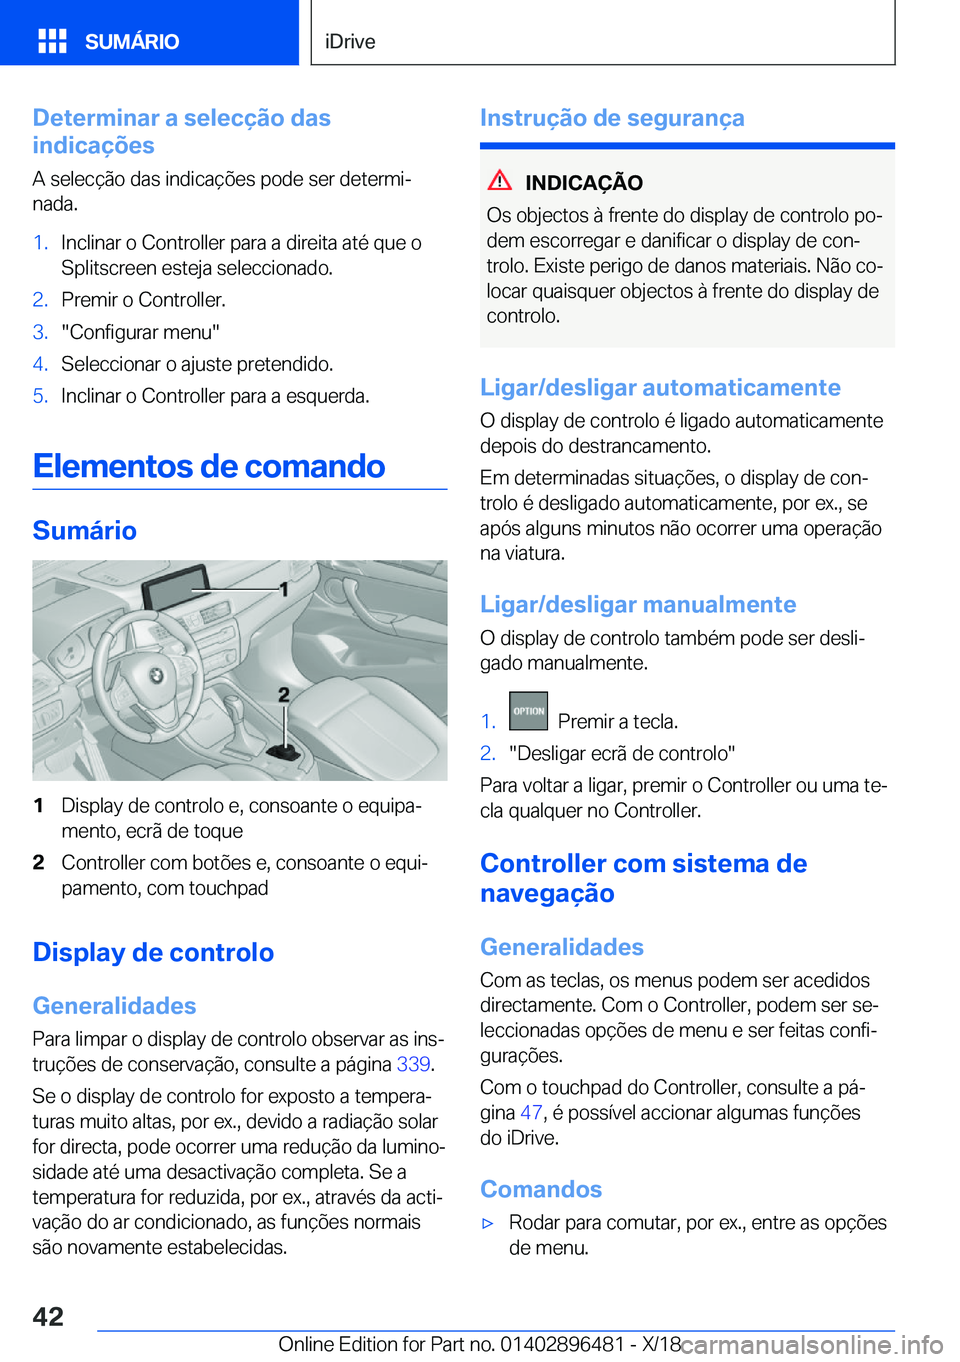 BMW X1 2019  Manual do condutor (in Portuguese) �D�e�t�e�r�m�i�n�a�r��a��s�e�l�e�c�